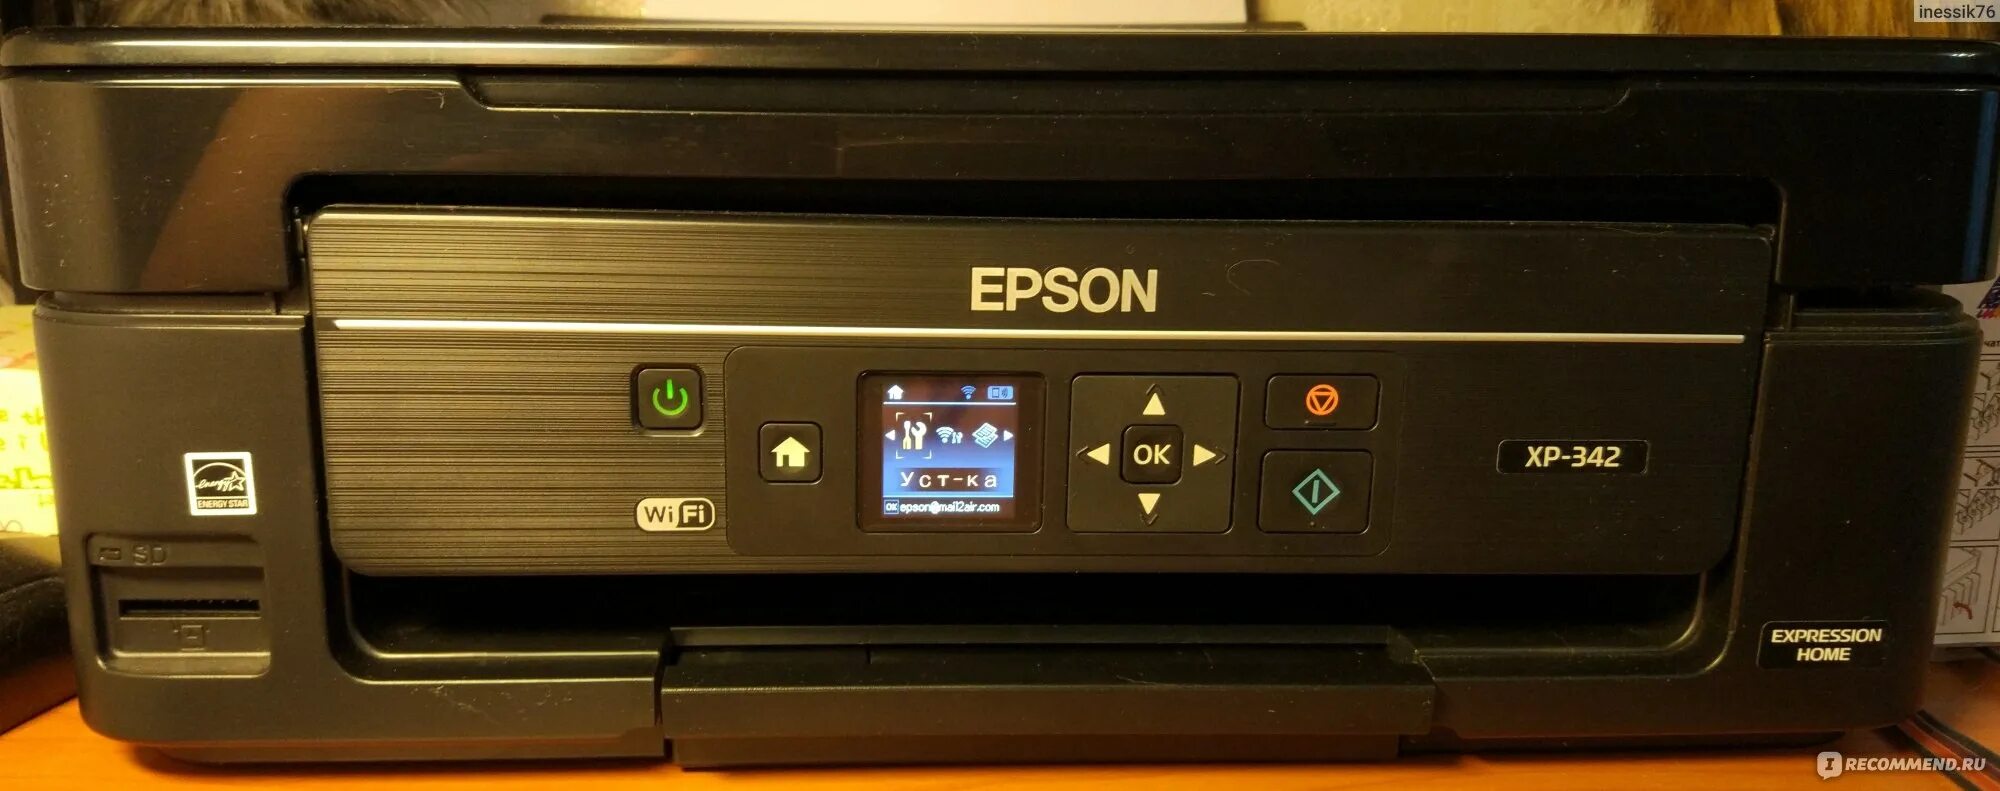 Хр 342. Эпсон xp342. СНПЧ для Epson XP-342. Epson XP-342. Принтер Эпсон хр 342.